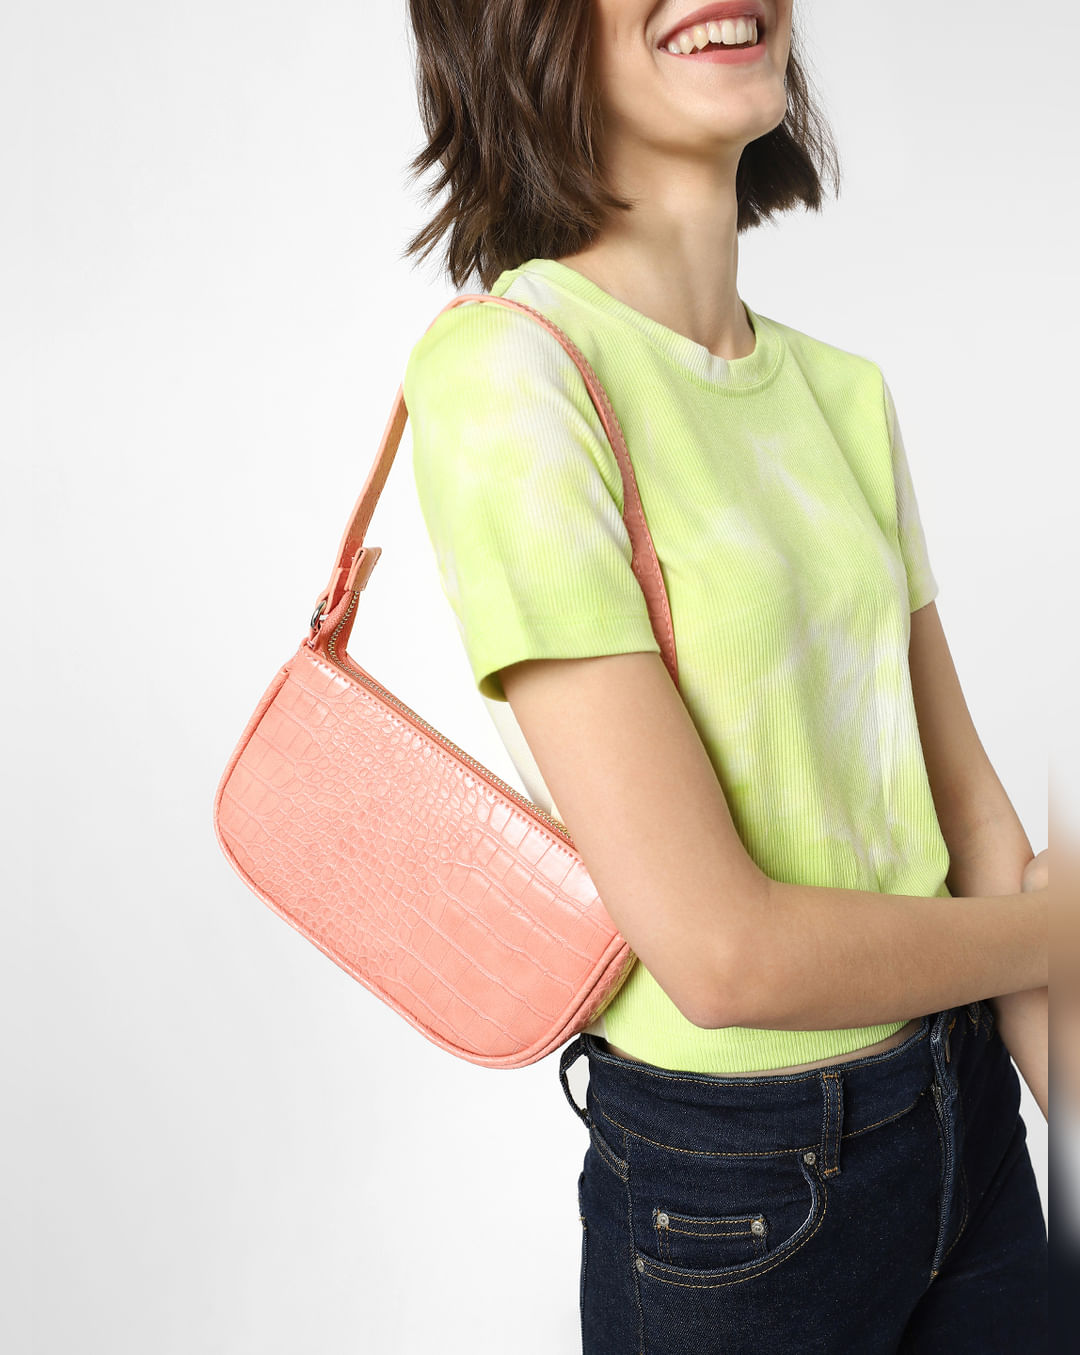 Pu Leather Shoulder Bag For Women, Simple Design Buckle Decor